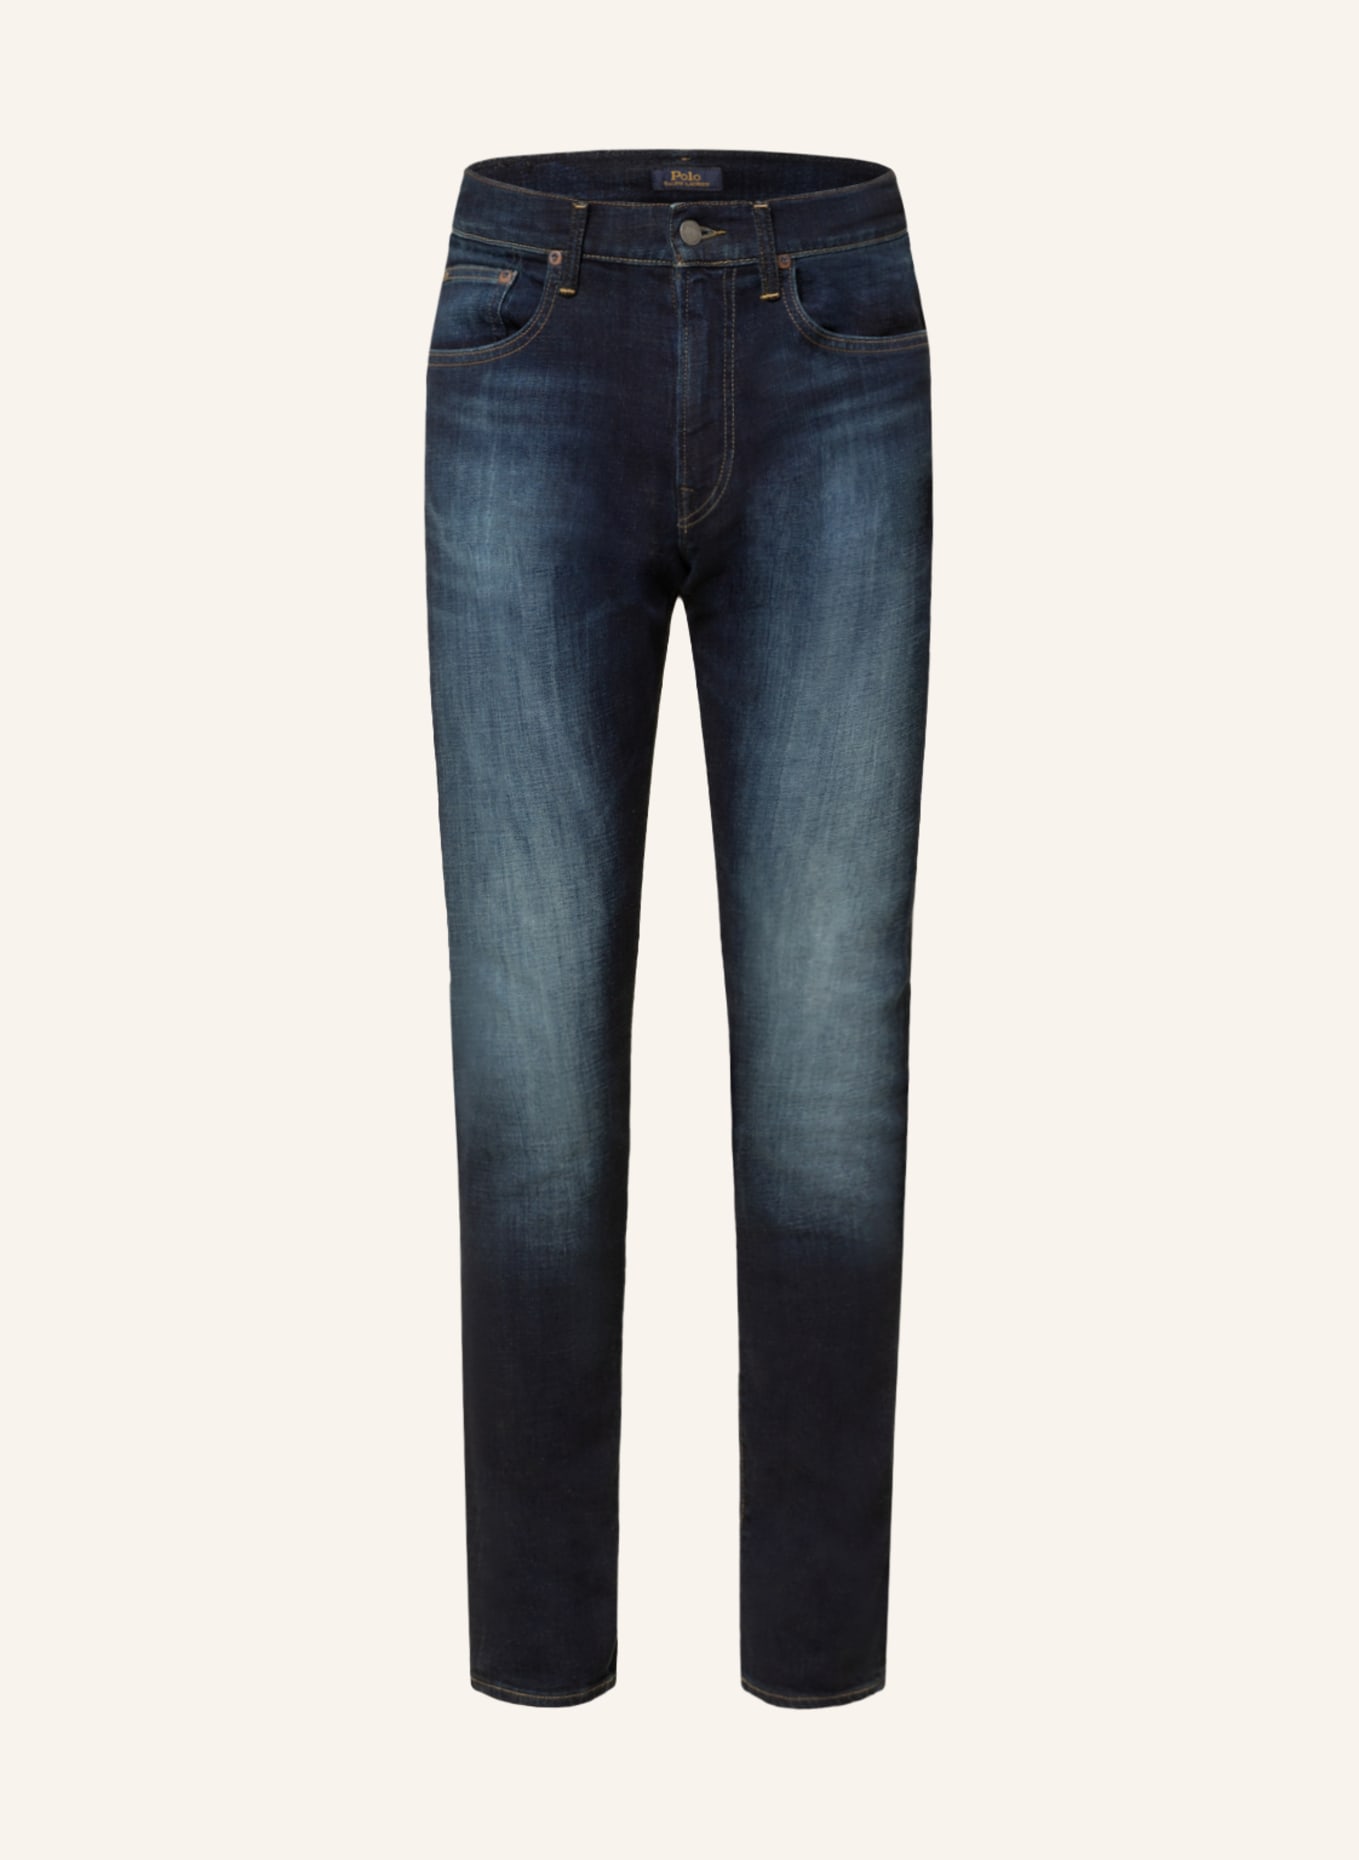 POLO RALPH LAUREN Jeans ELDRIDGE SKINNY Skinny Fit, Farbe: 001 MURPHY STRETCH (Bild 1)